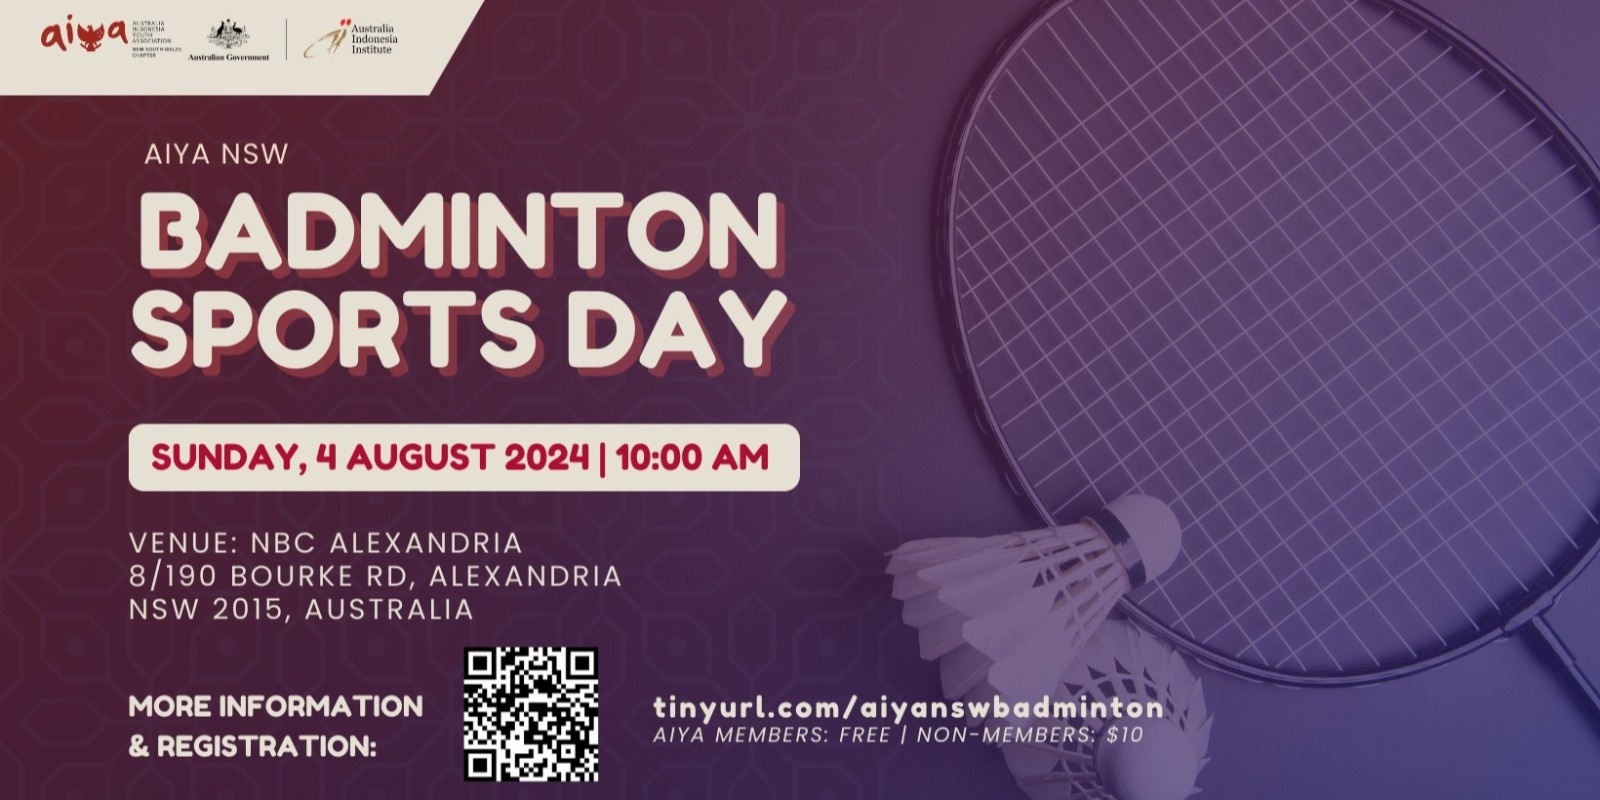 Banner image for AIYA NSW Badminton Sports Day